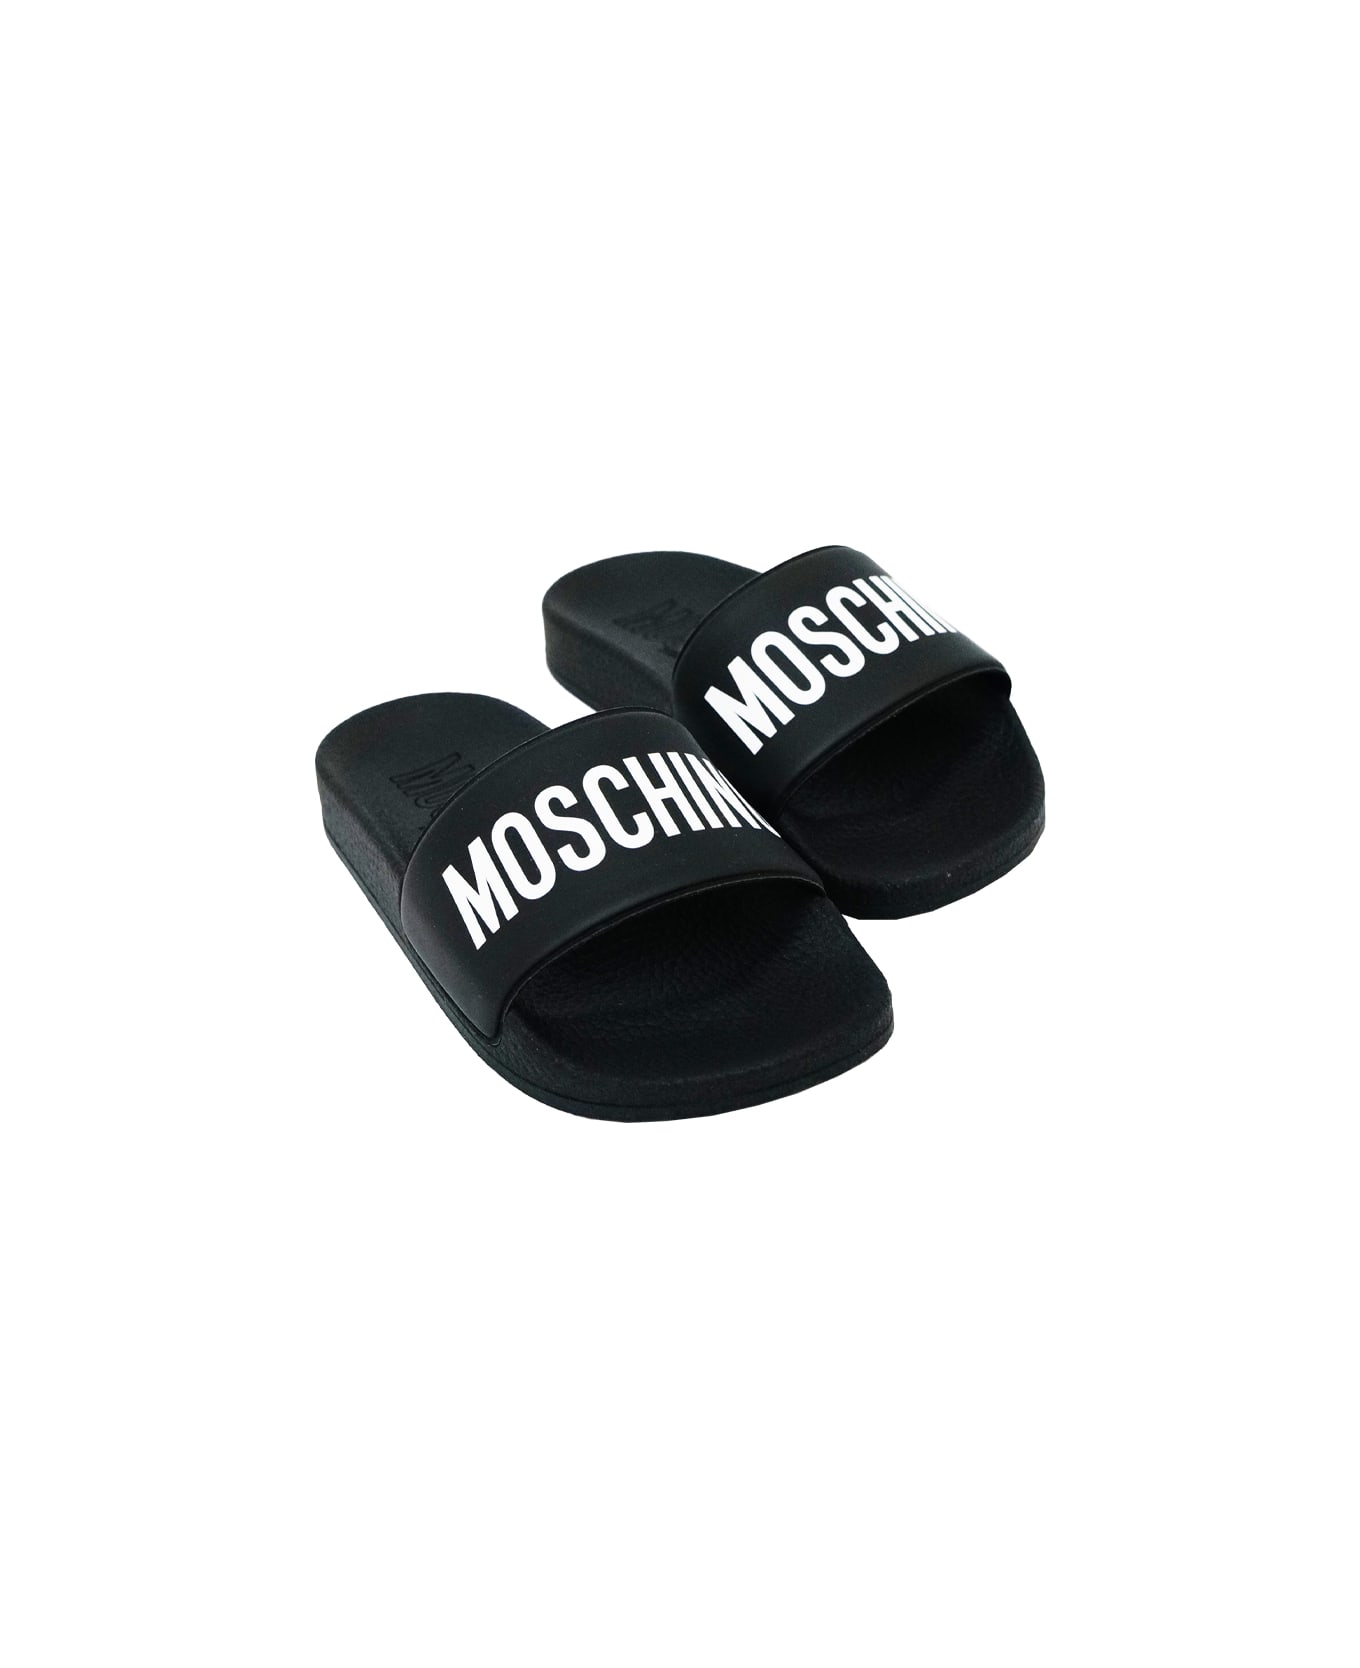 Moschino Slippers - Back